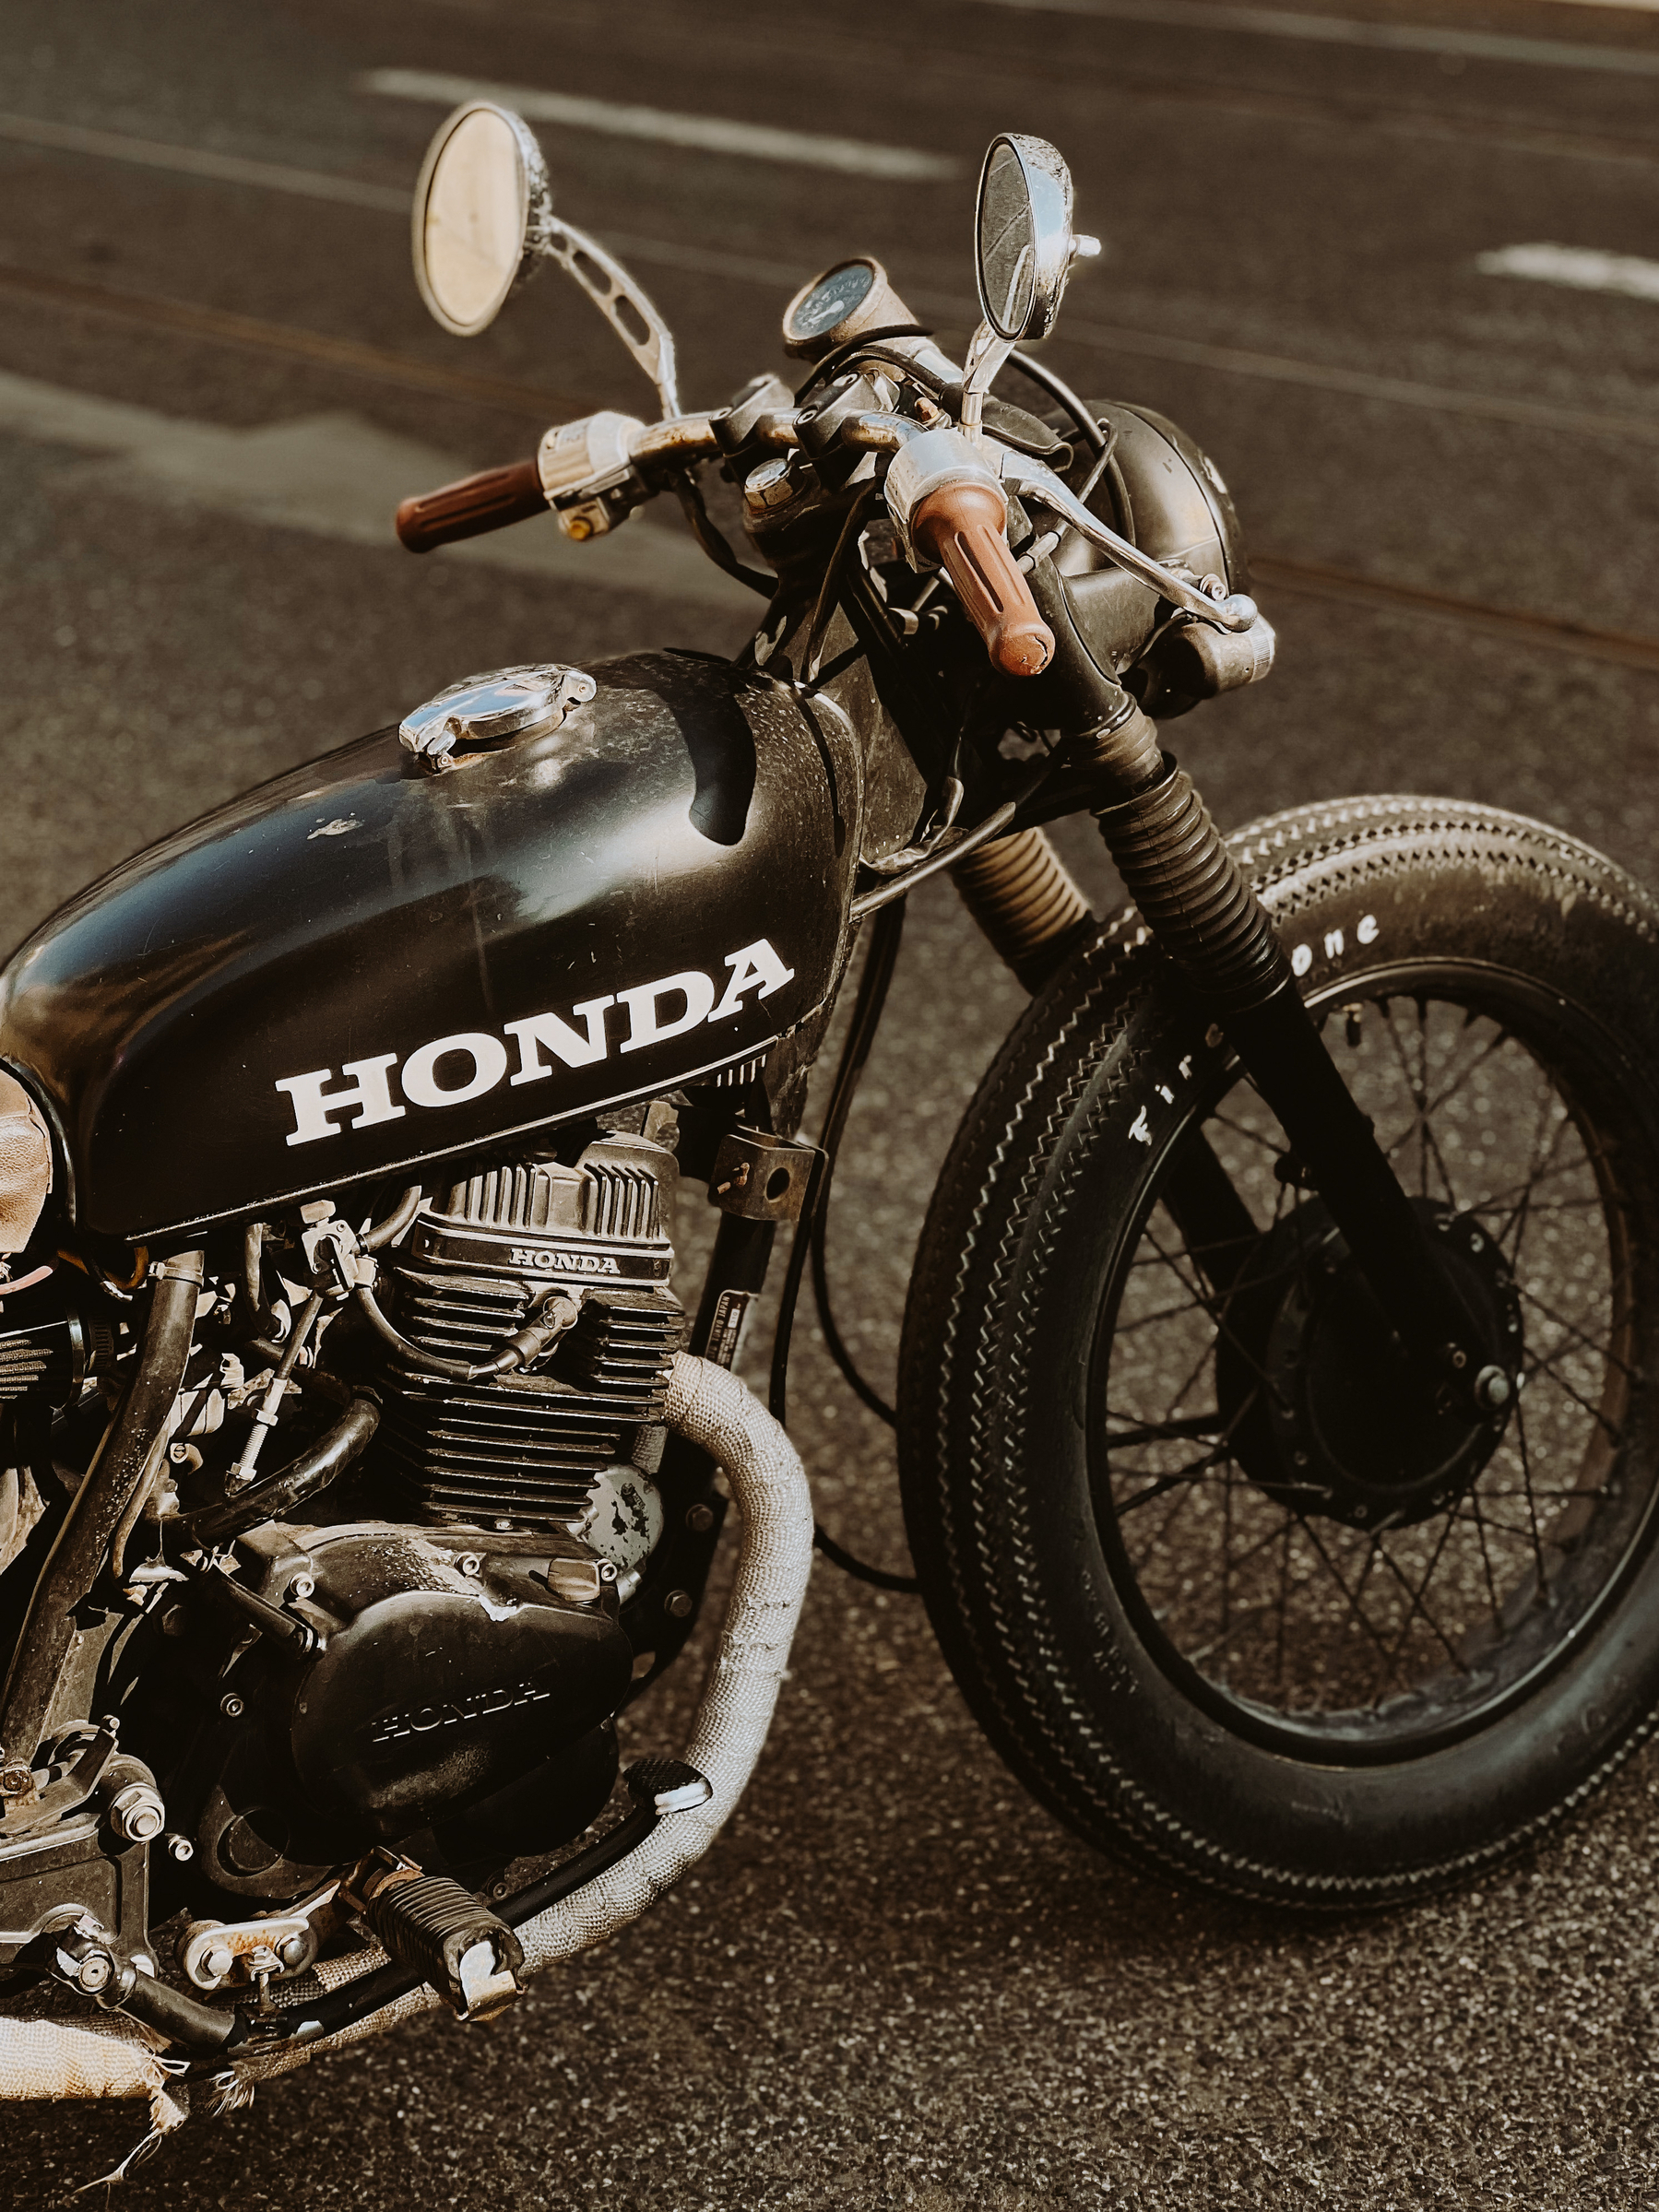 a Honda motorcycle.